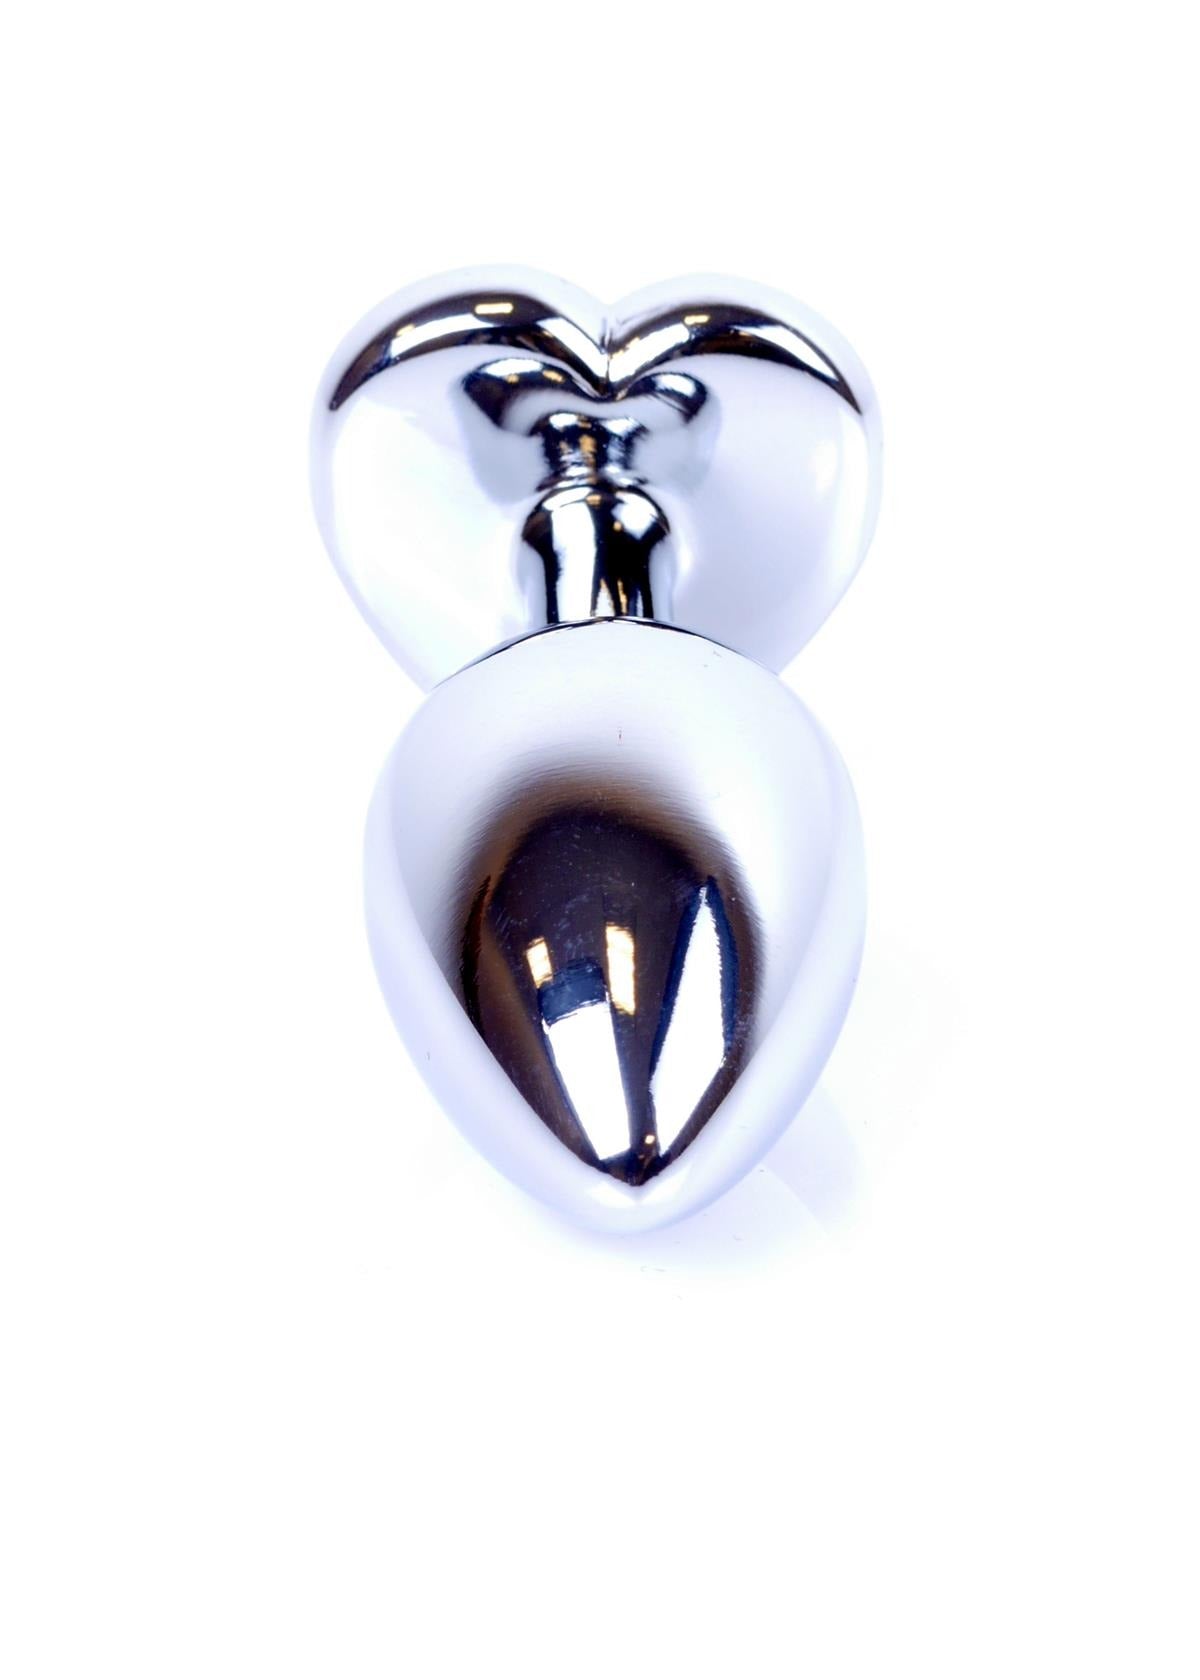 Bossoftoys - 64-00051 - Heart design silver Plug - Silver - Anal - Heart - Green stone - length 7 cm - dia 2,7 cm - window colour box